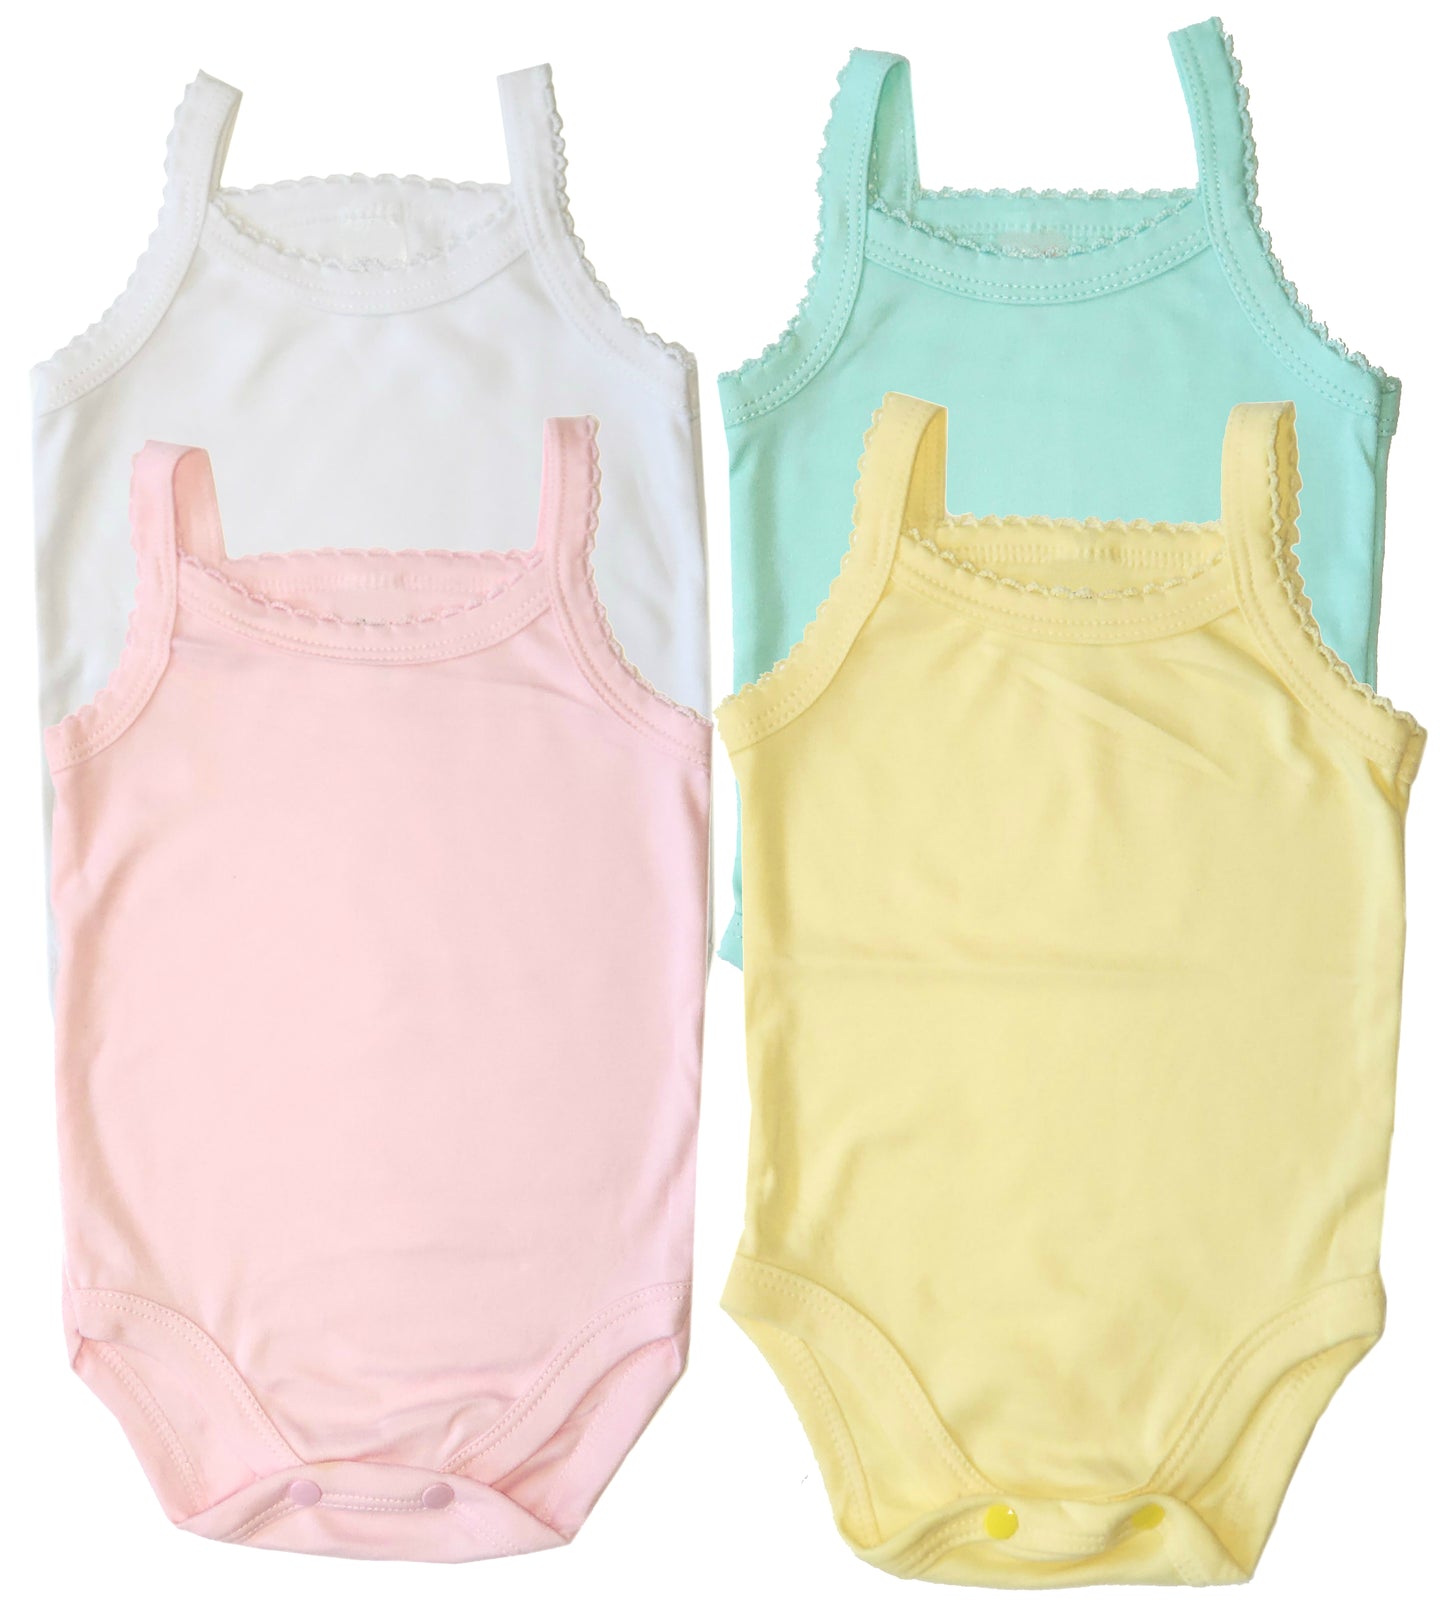 Baby Camisole Girl Bodysuit Newborn Sleeveless Set Romper KC-4419-7